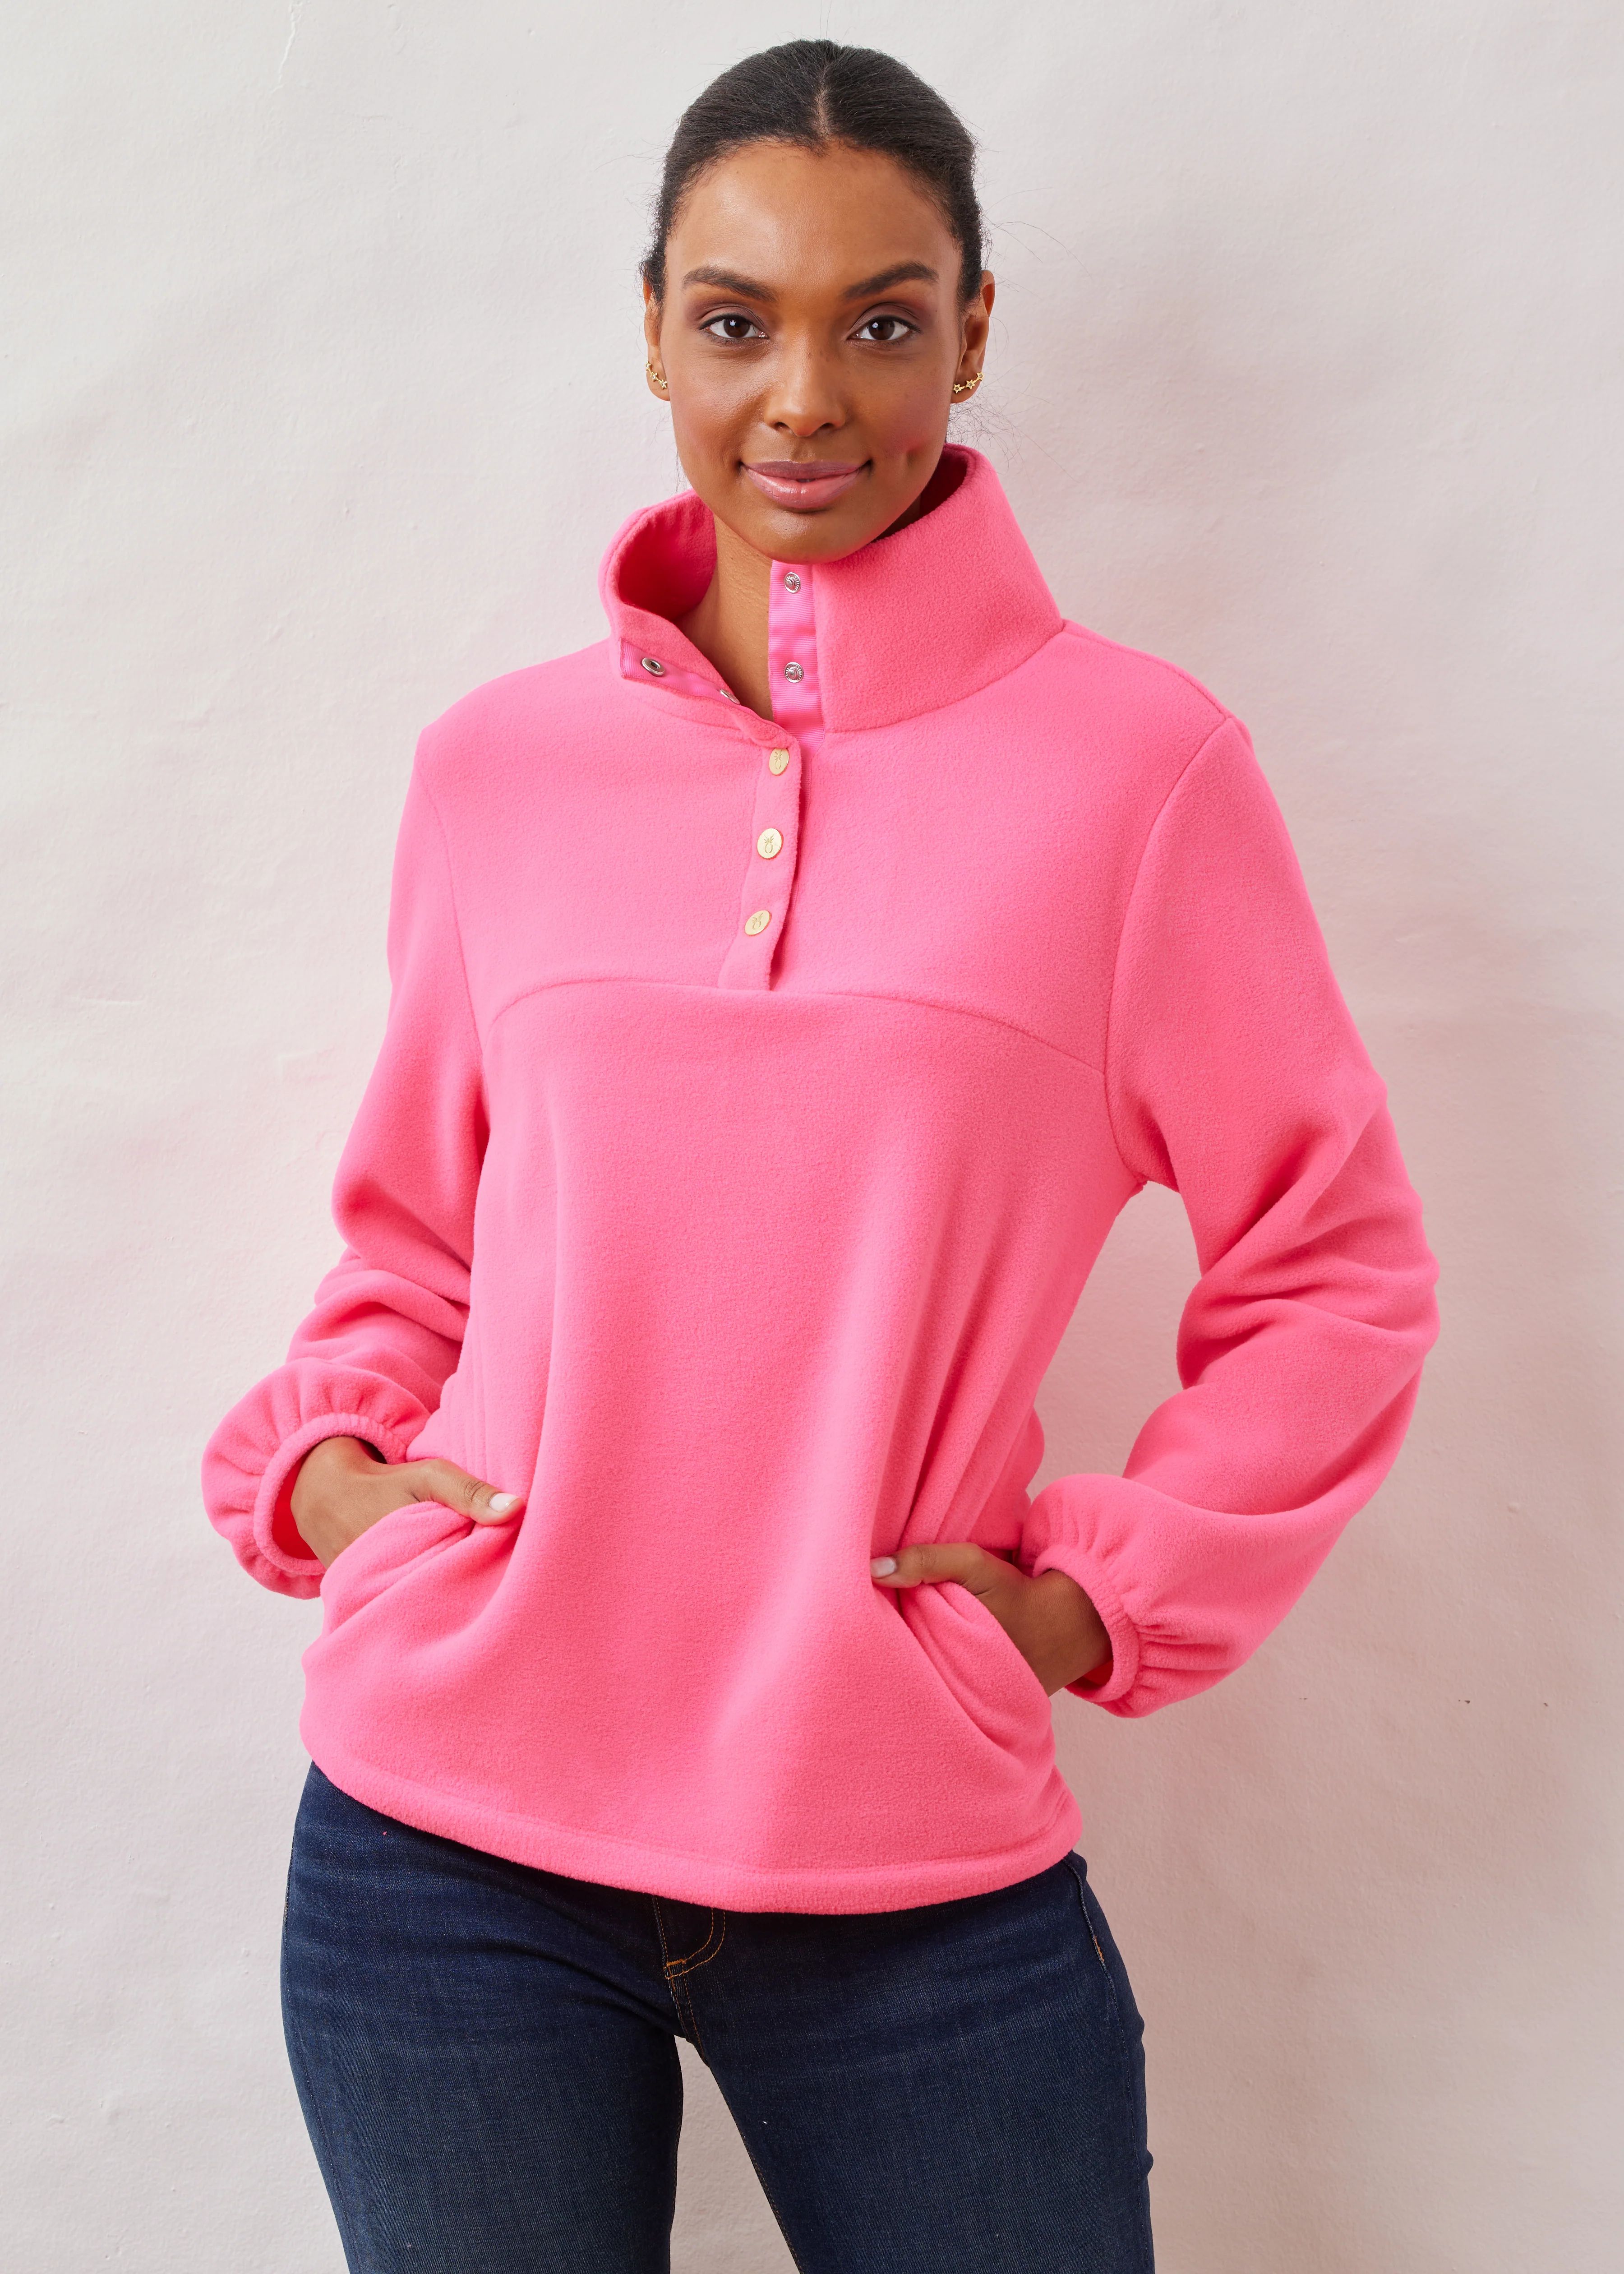 Dreamweaver Pullover in Vello Fleece (Neon Pink) | Dudley Stephens